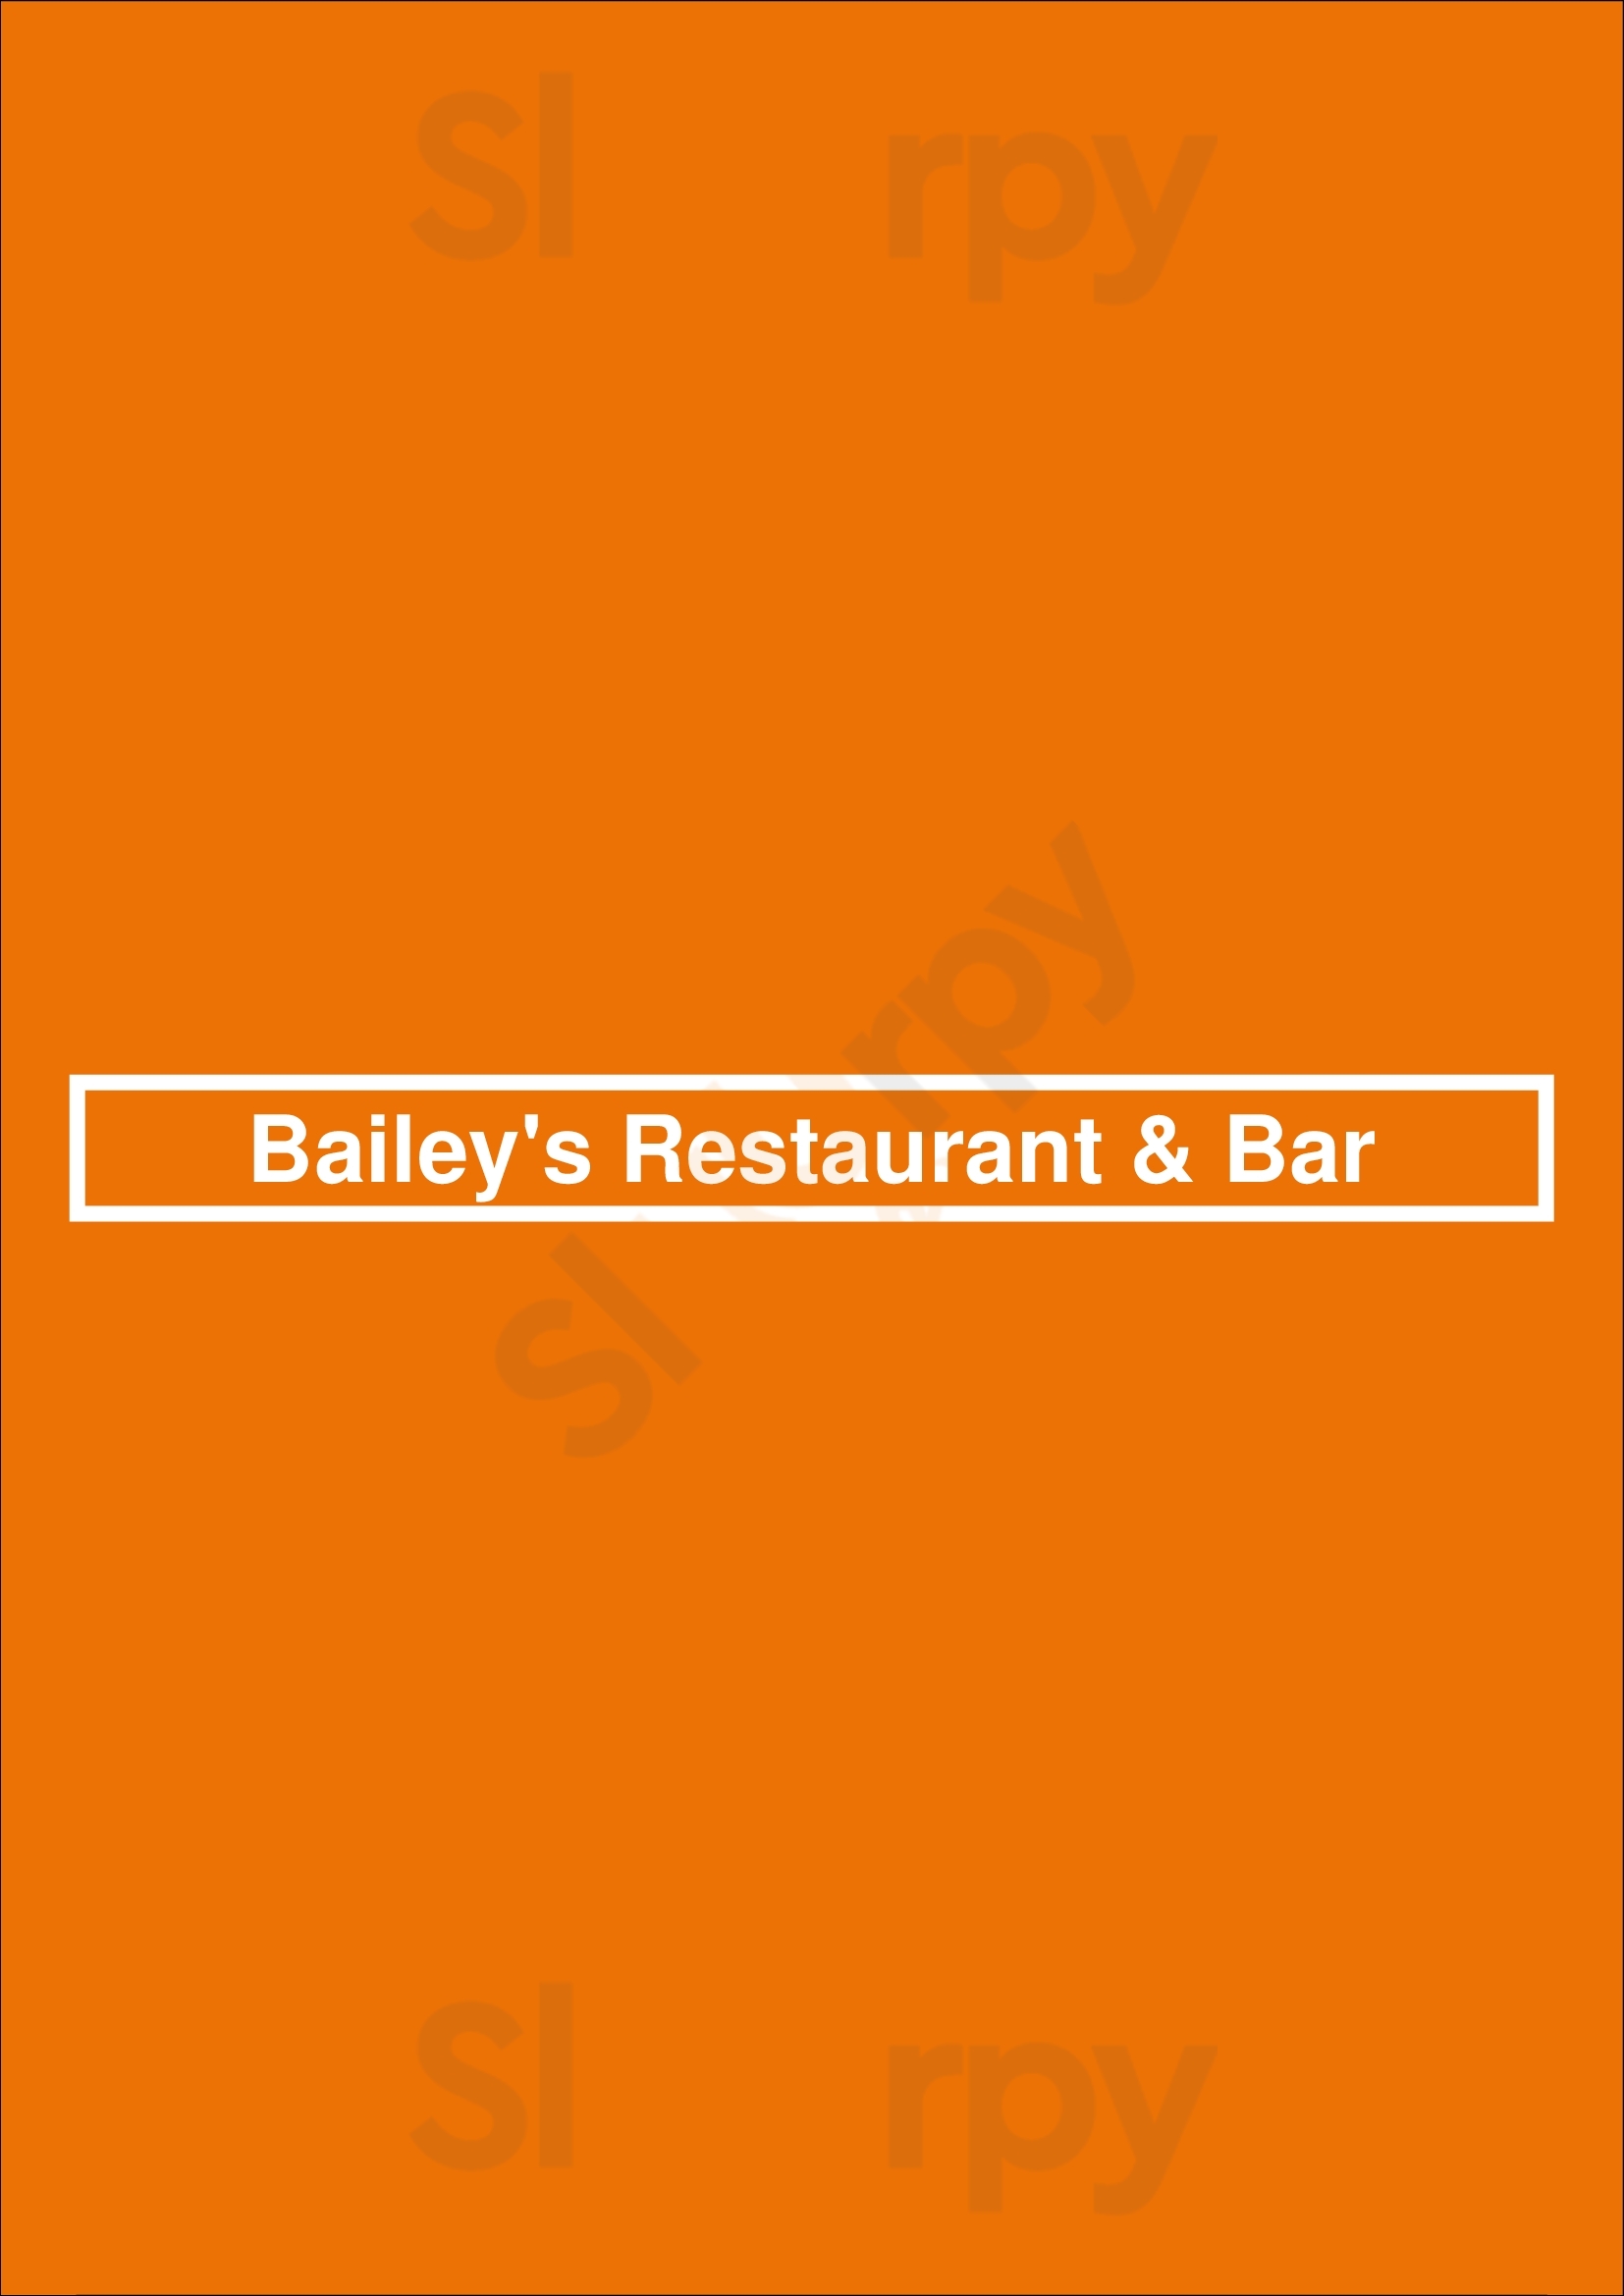 Bailey's Restaurant & Bar Winnipeg Menu - 1